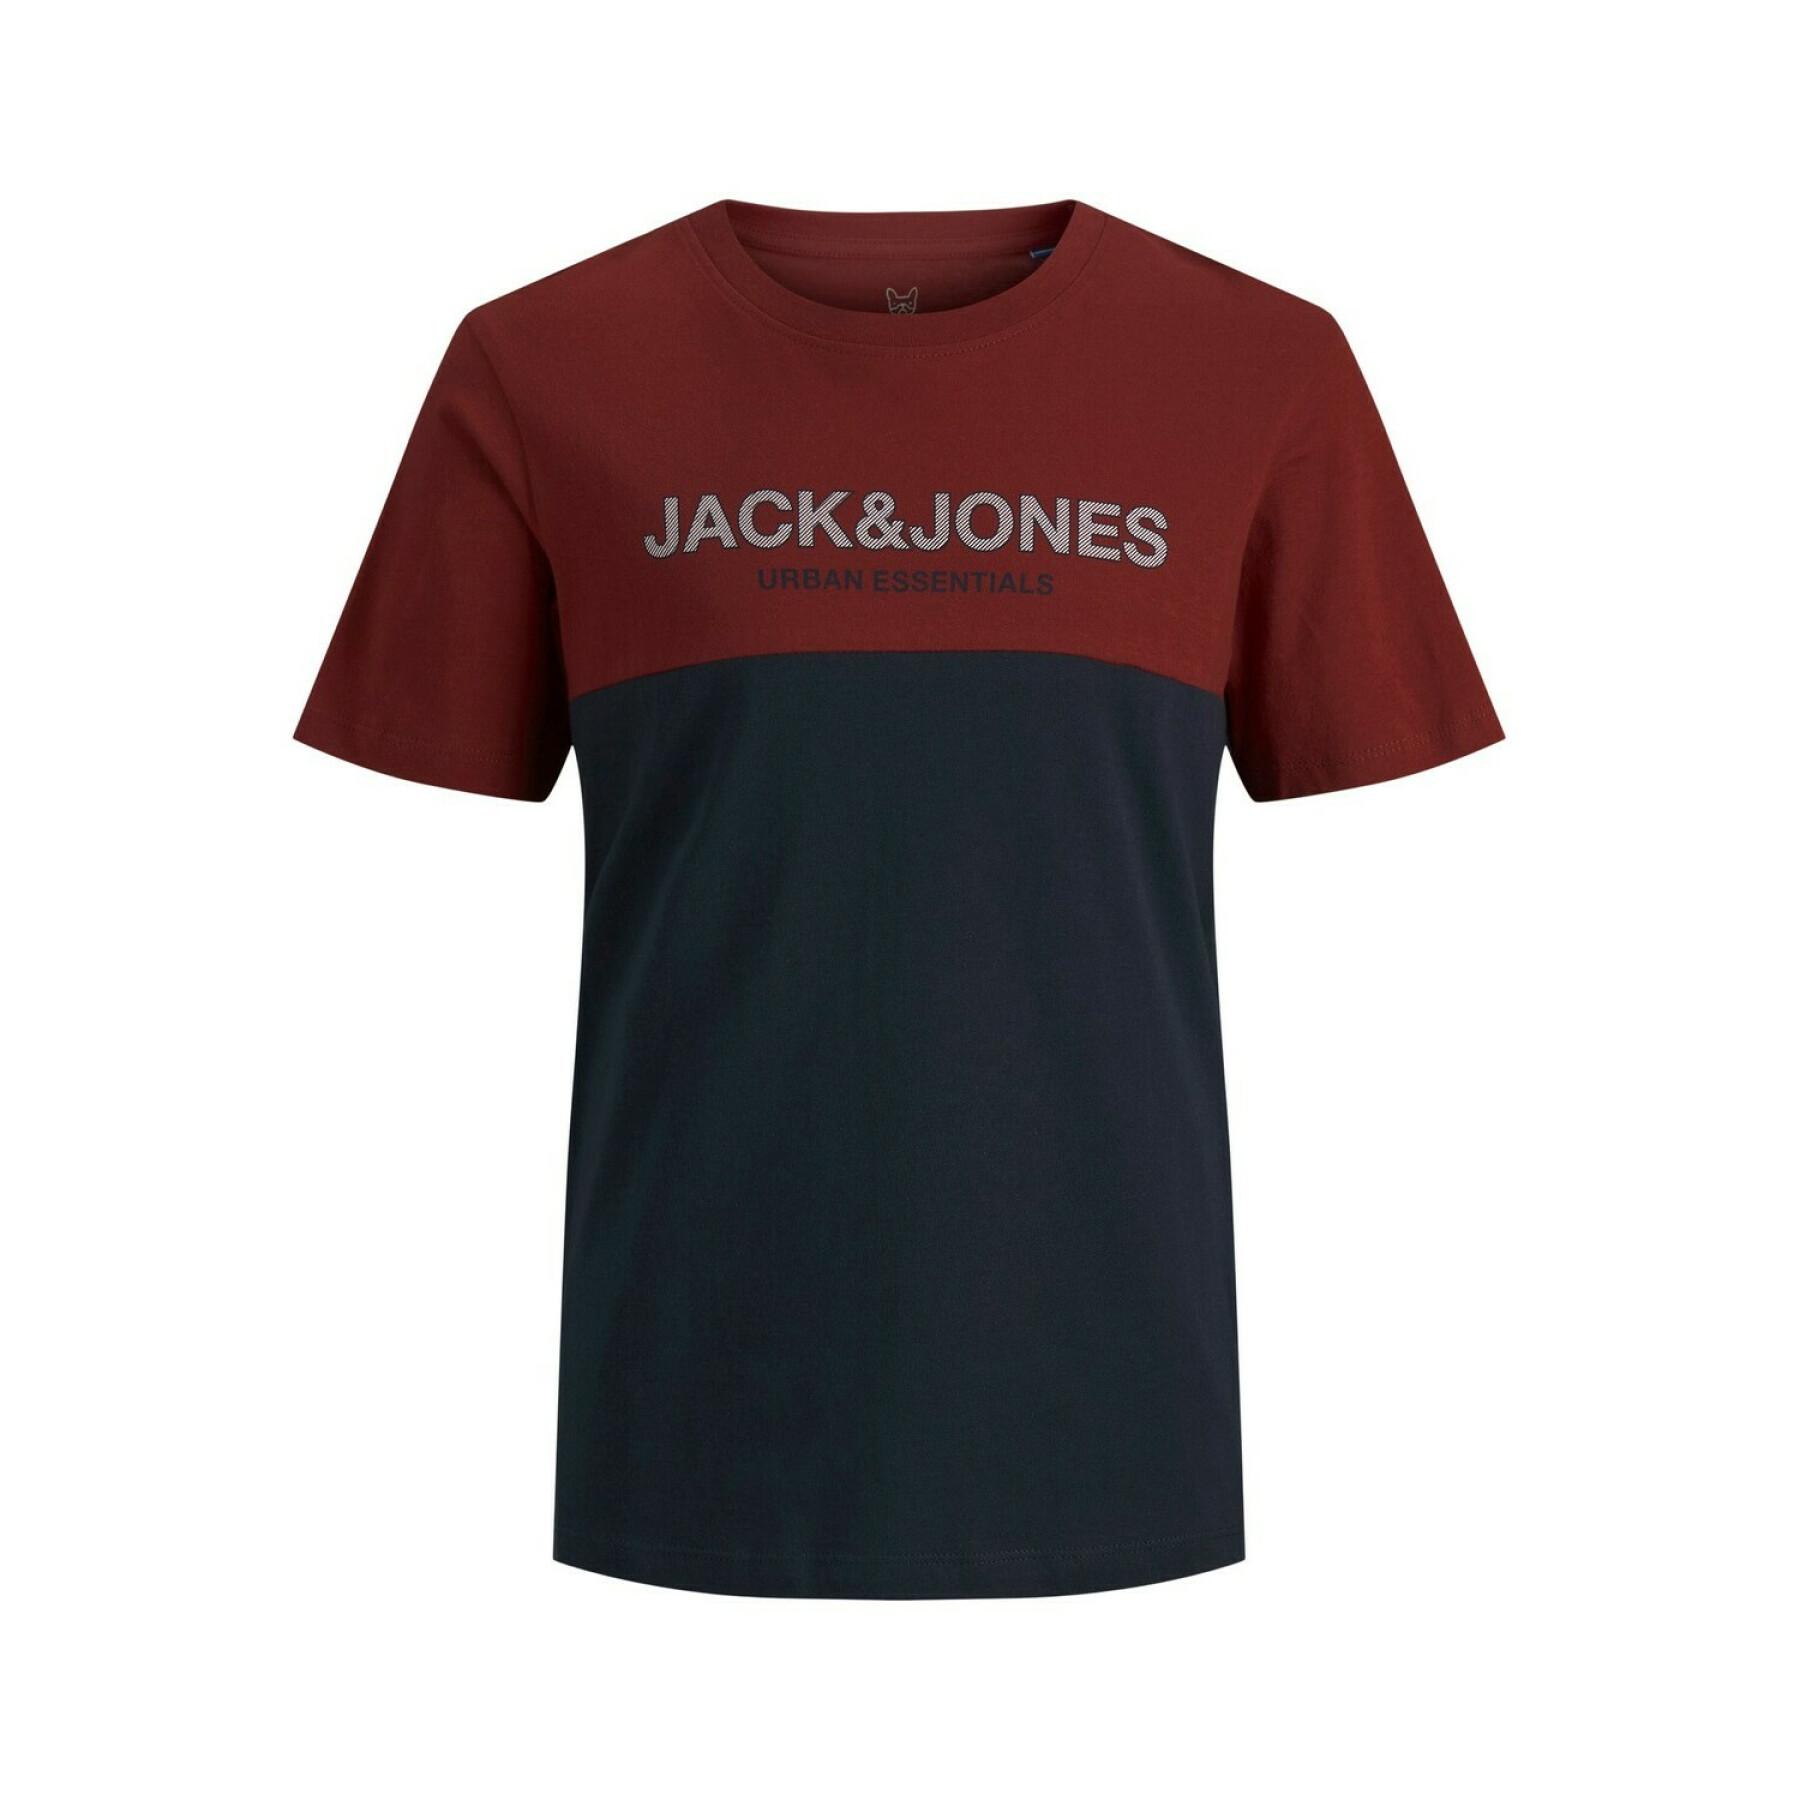 Kinder T-shirt Jack & Jones Urban